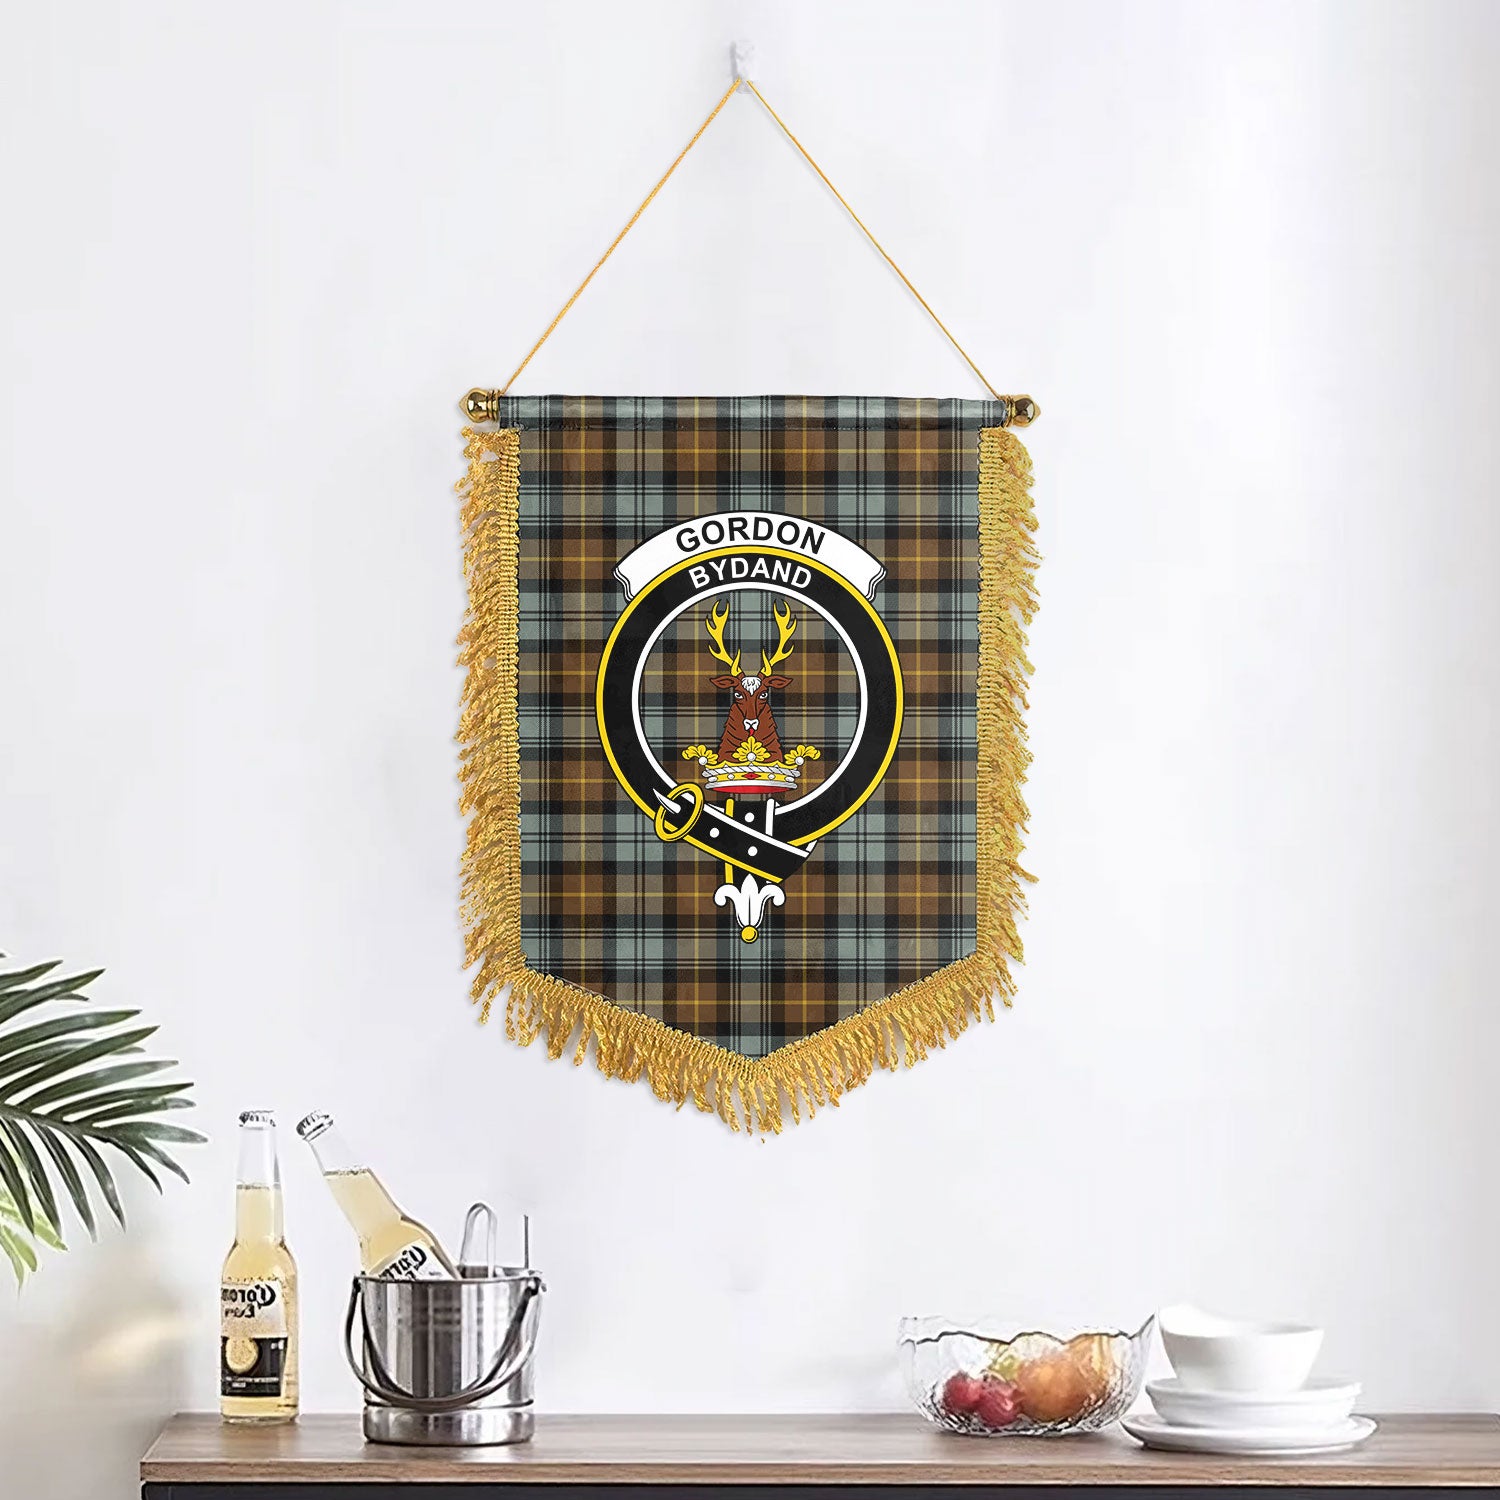 Gordon Weathered Tartan Crest Wall Hanging Banner